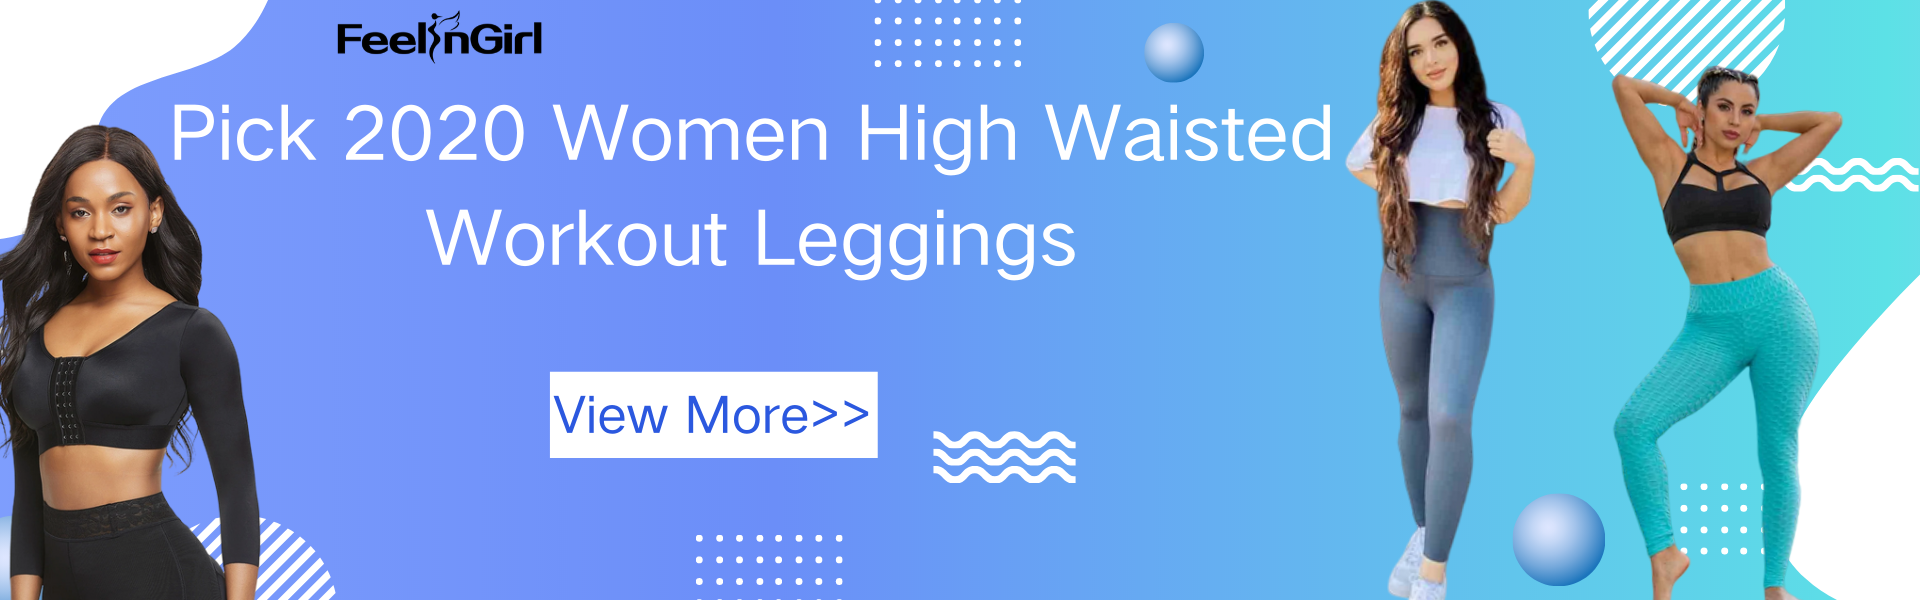 Pick 2020 Women High Waisted Workout Leggings